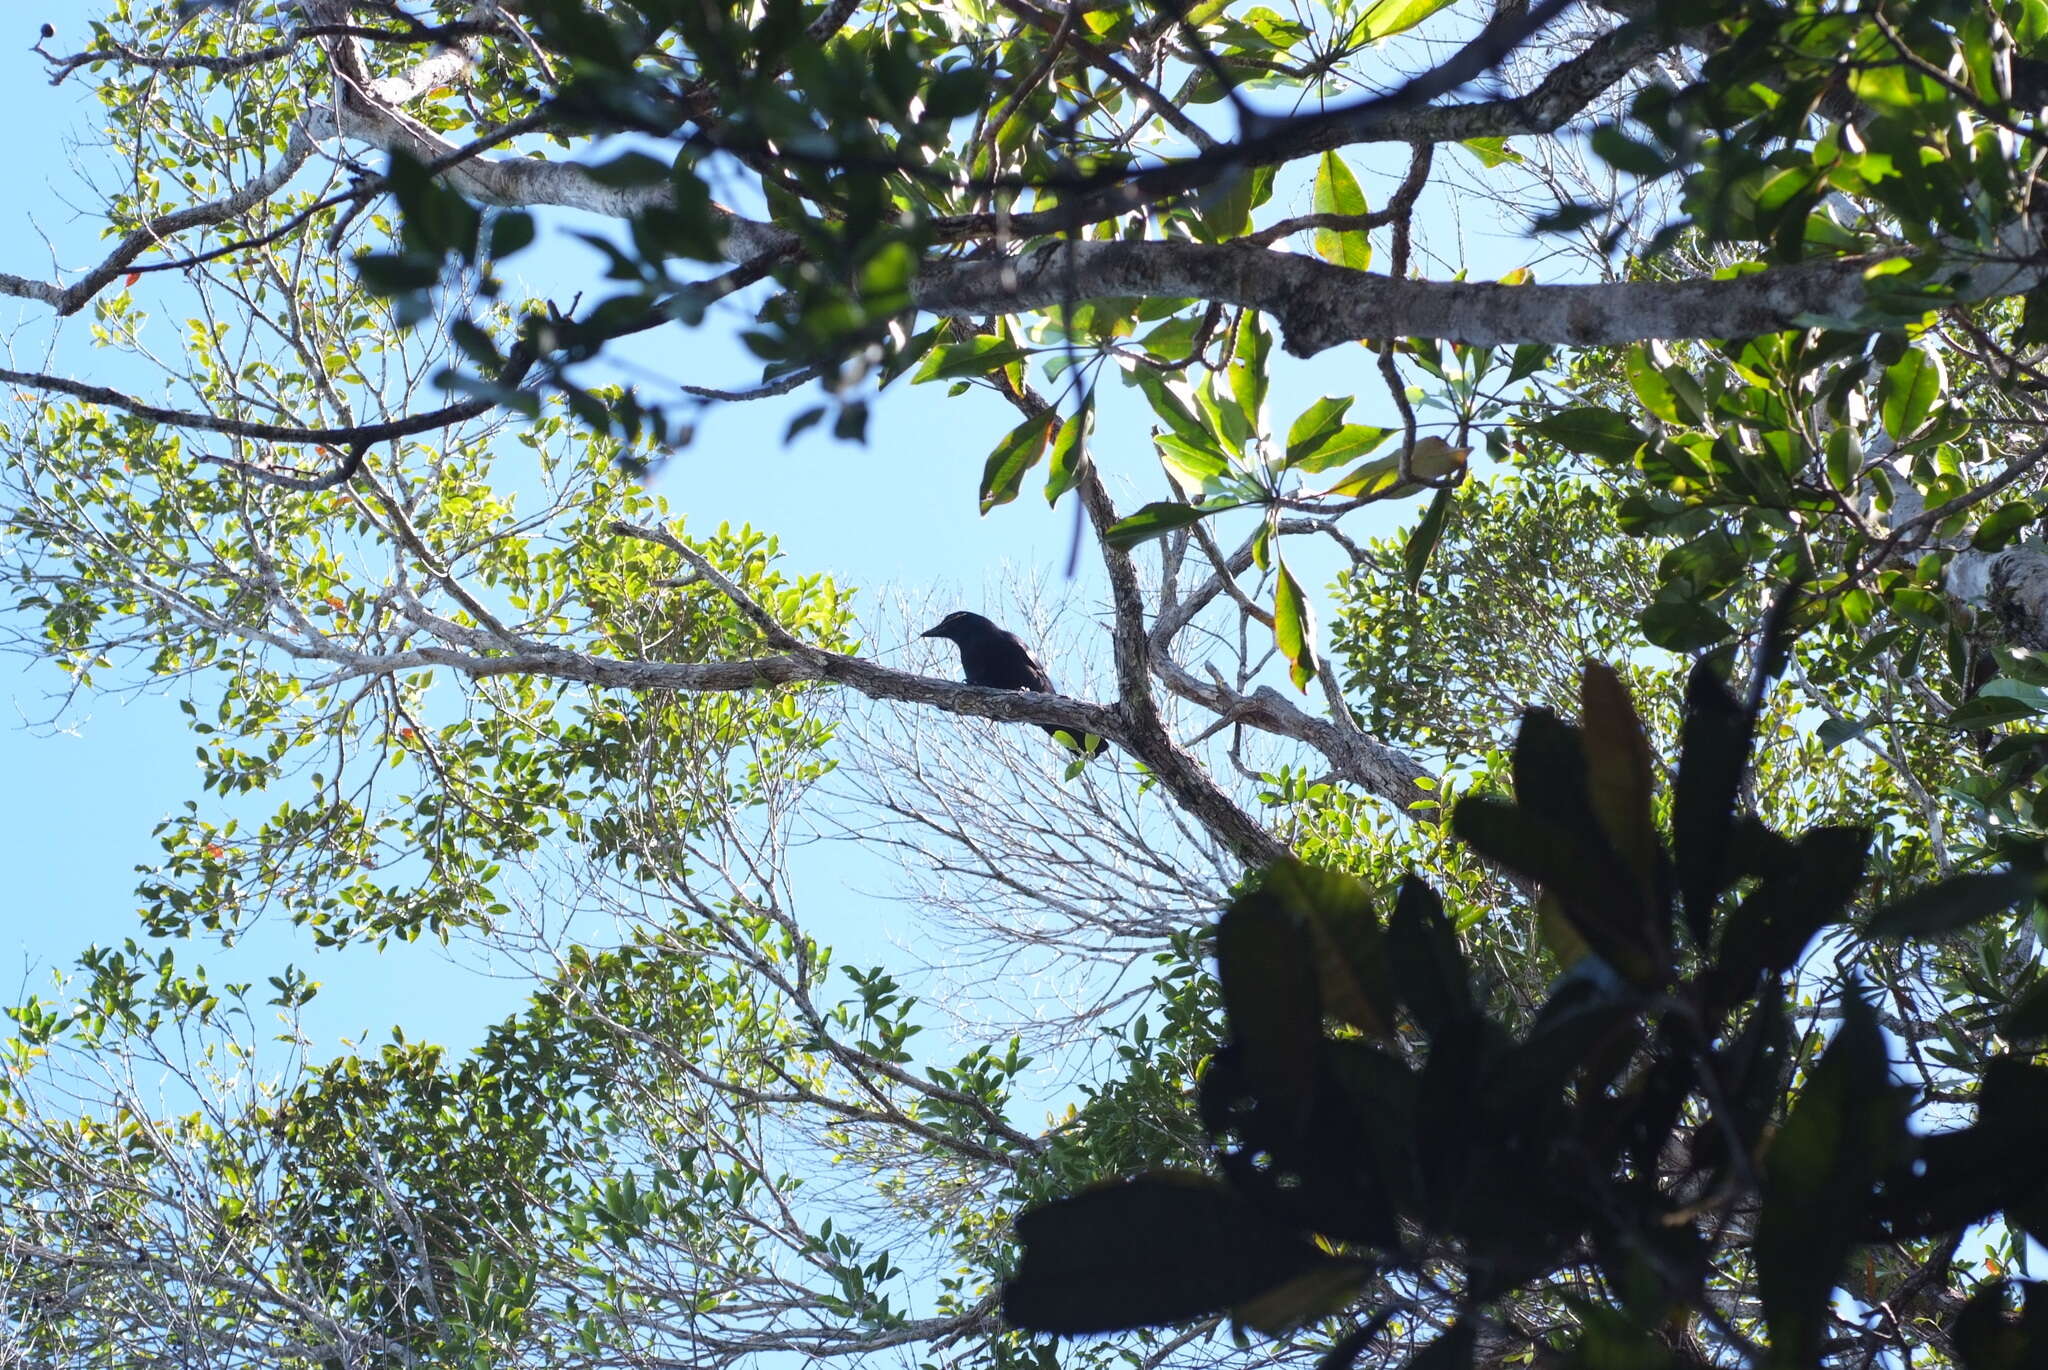 Image of New Caledonian Crow